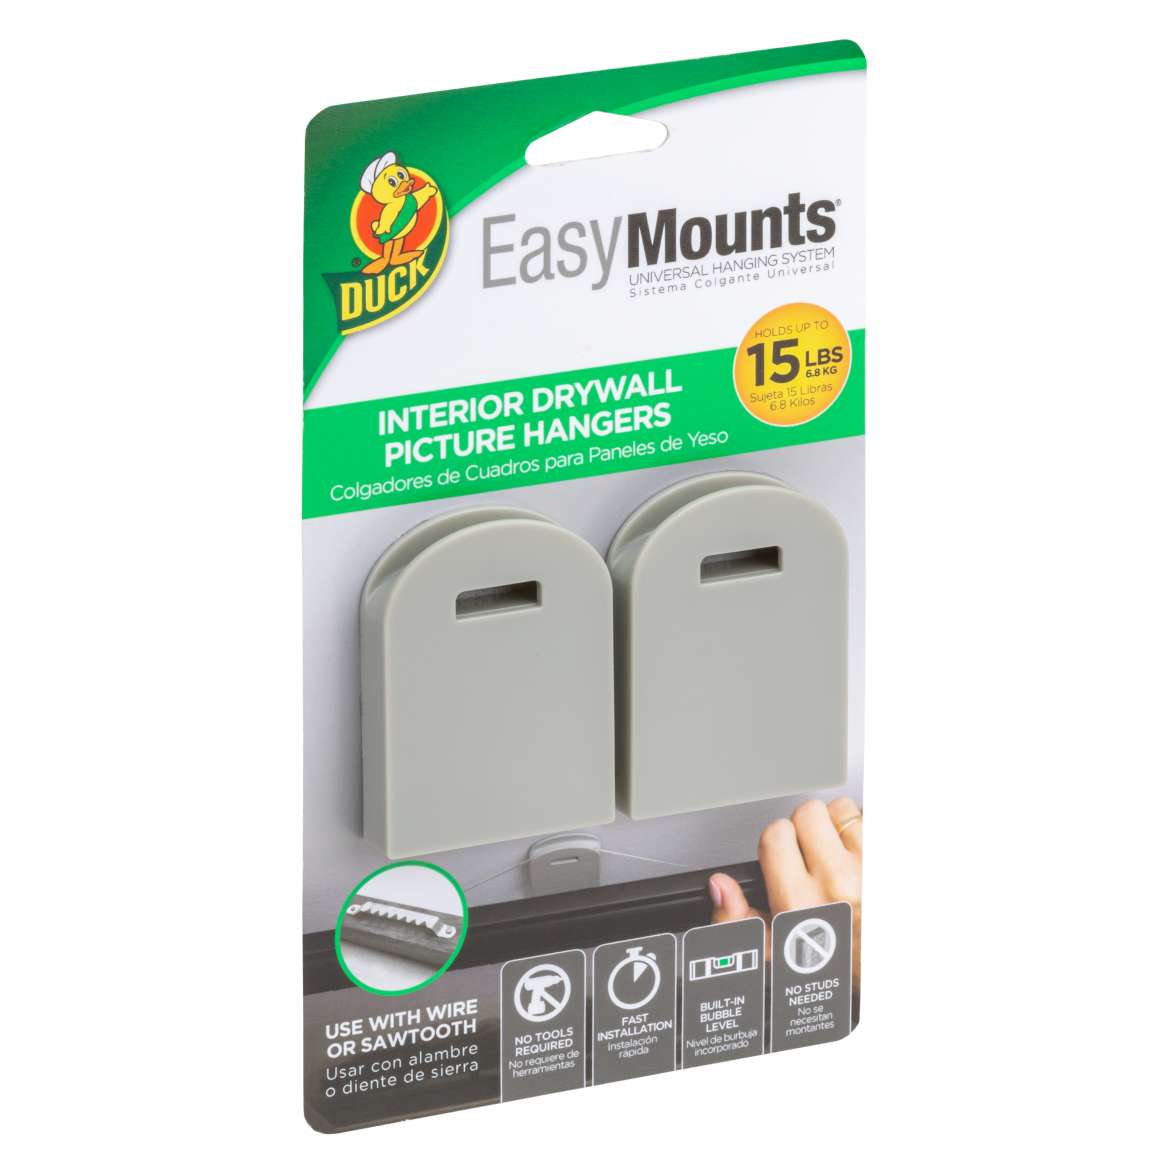 Duck® EasyMounts® Interior Drywall Picture Hanger Image